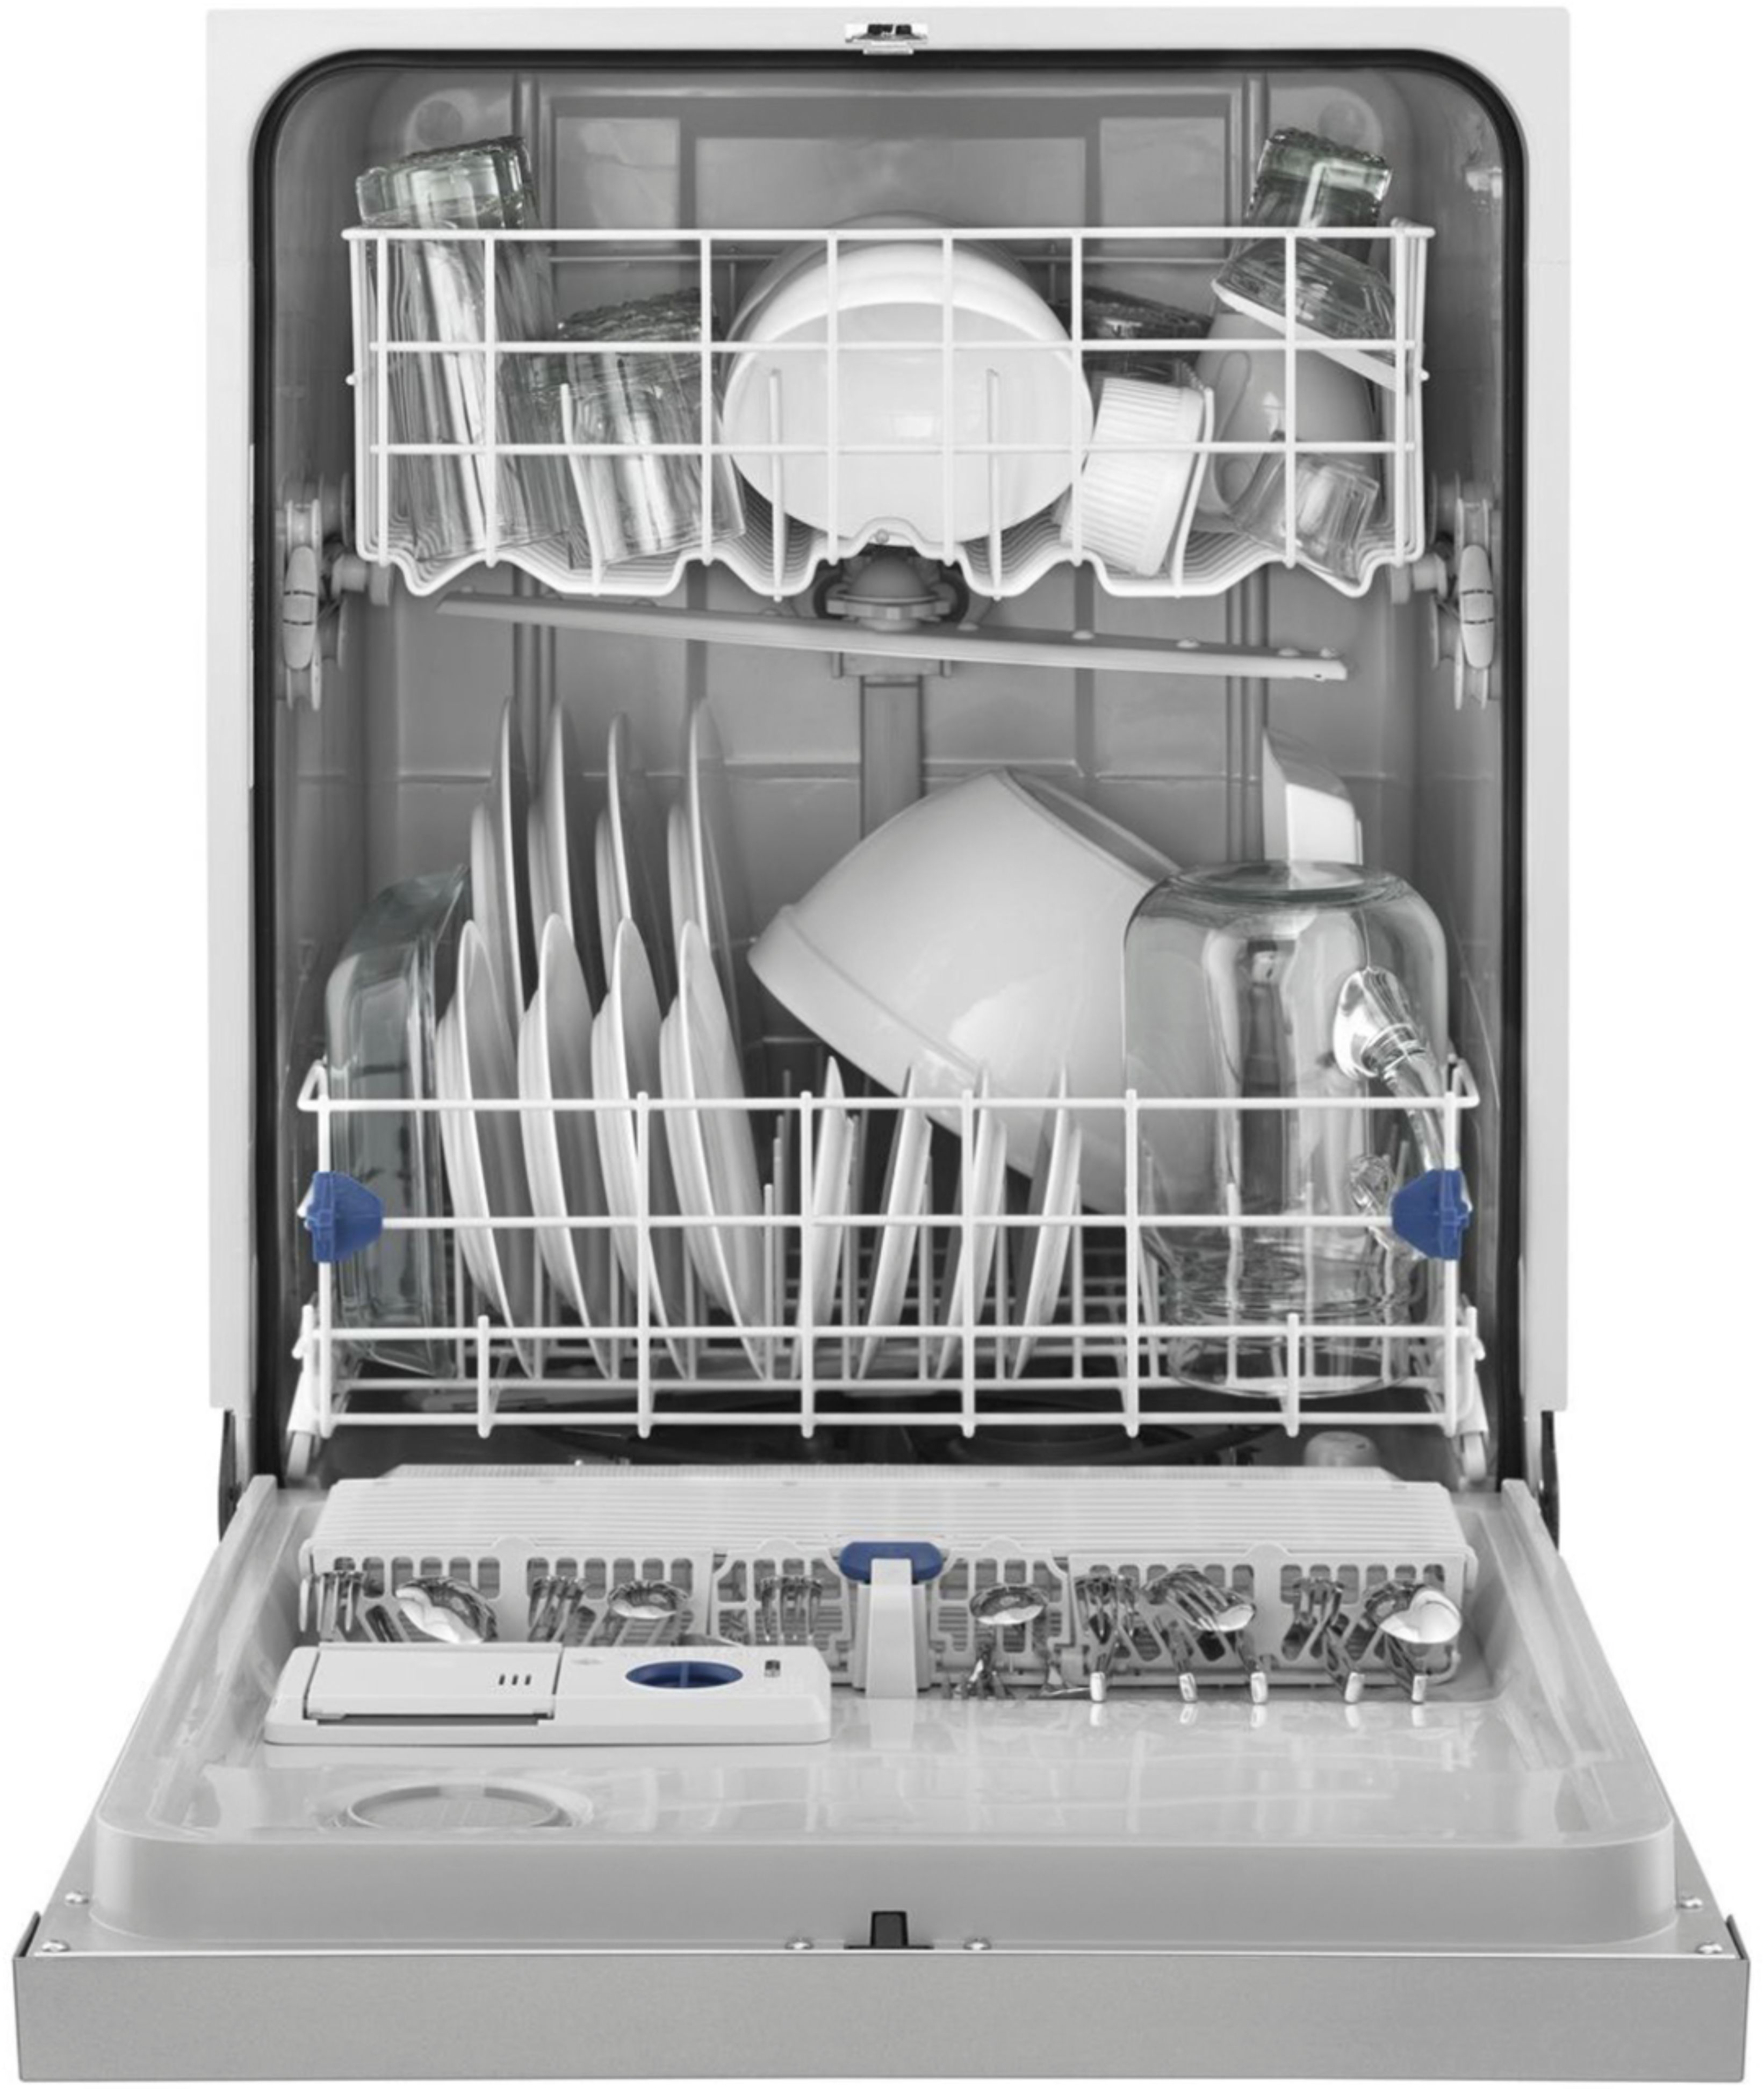 Whirlpool Dishwasher - appliances - by owner - sale - craigslist